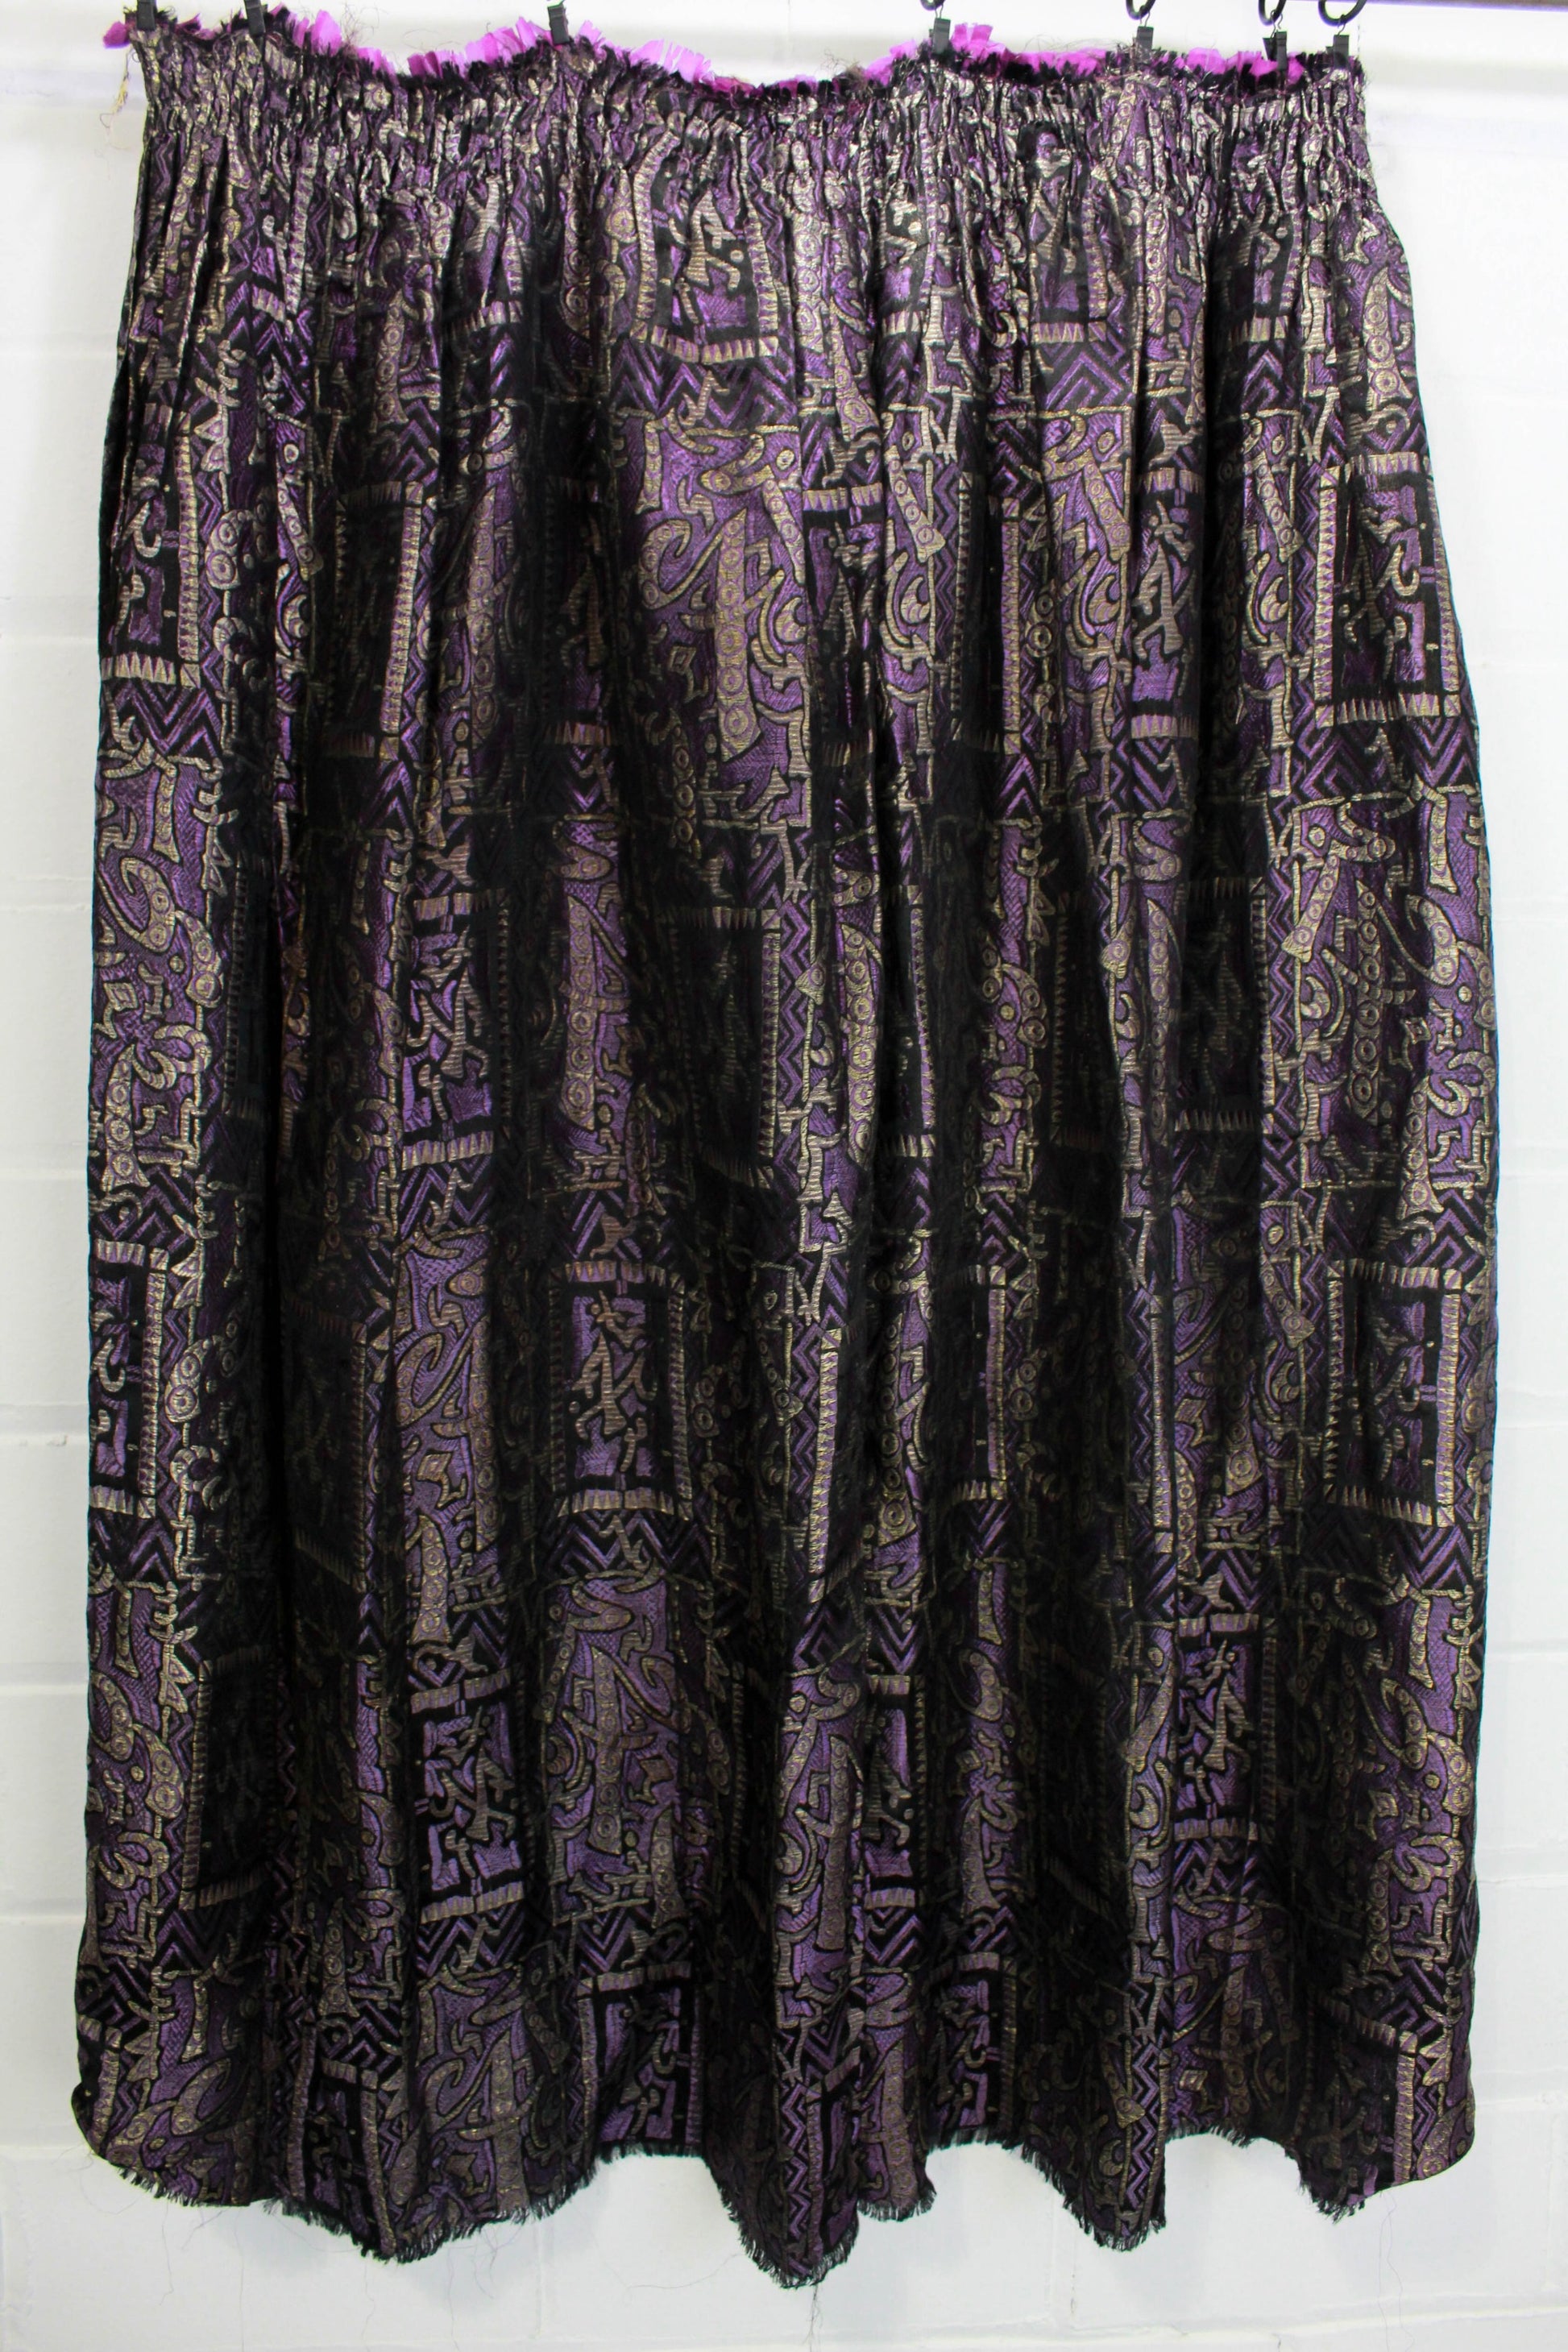 1920s art deco silk lame metallic purple and gold abstract print fabric